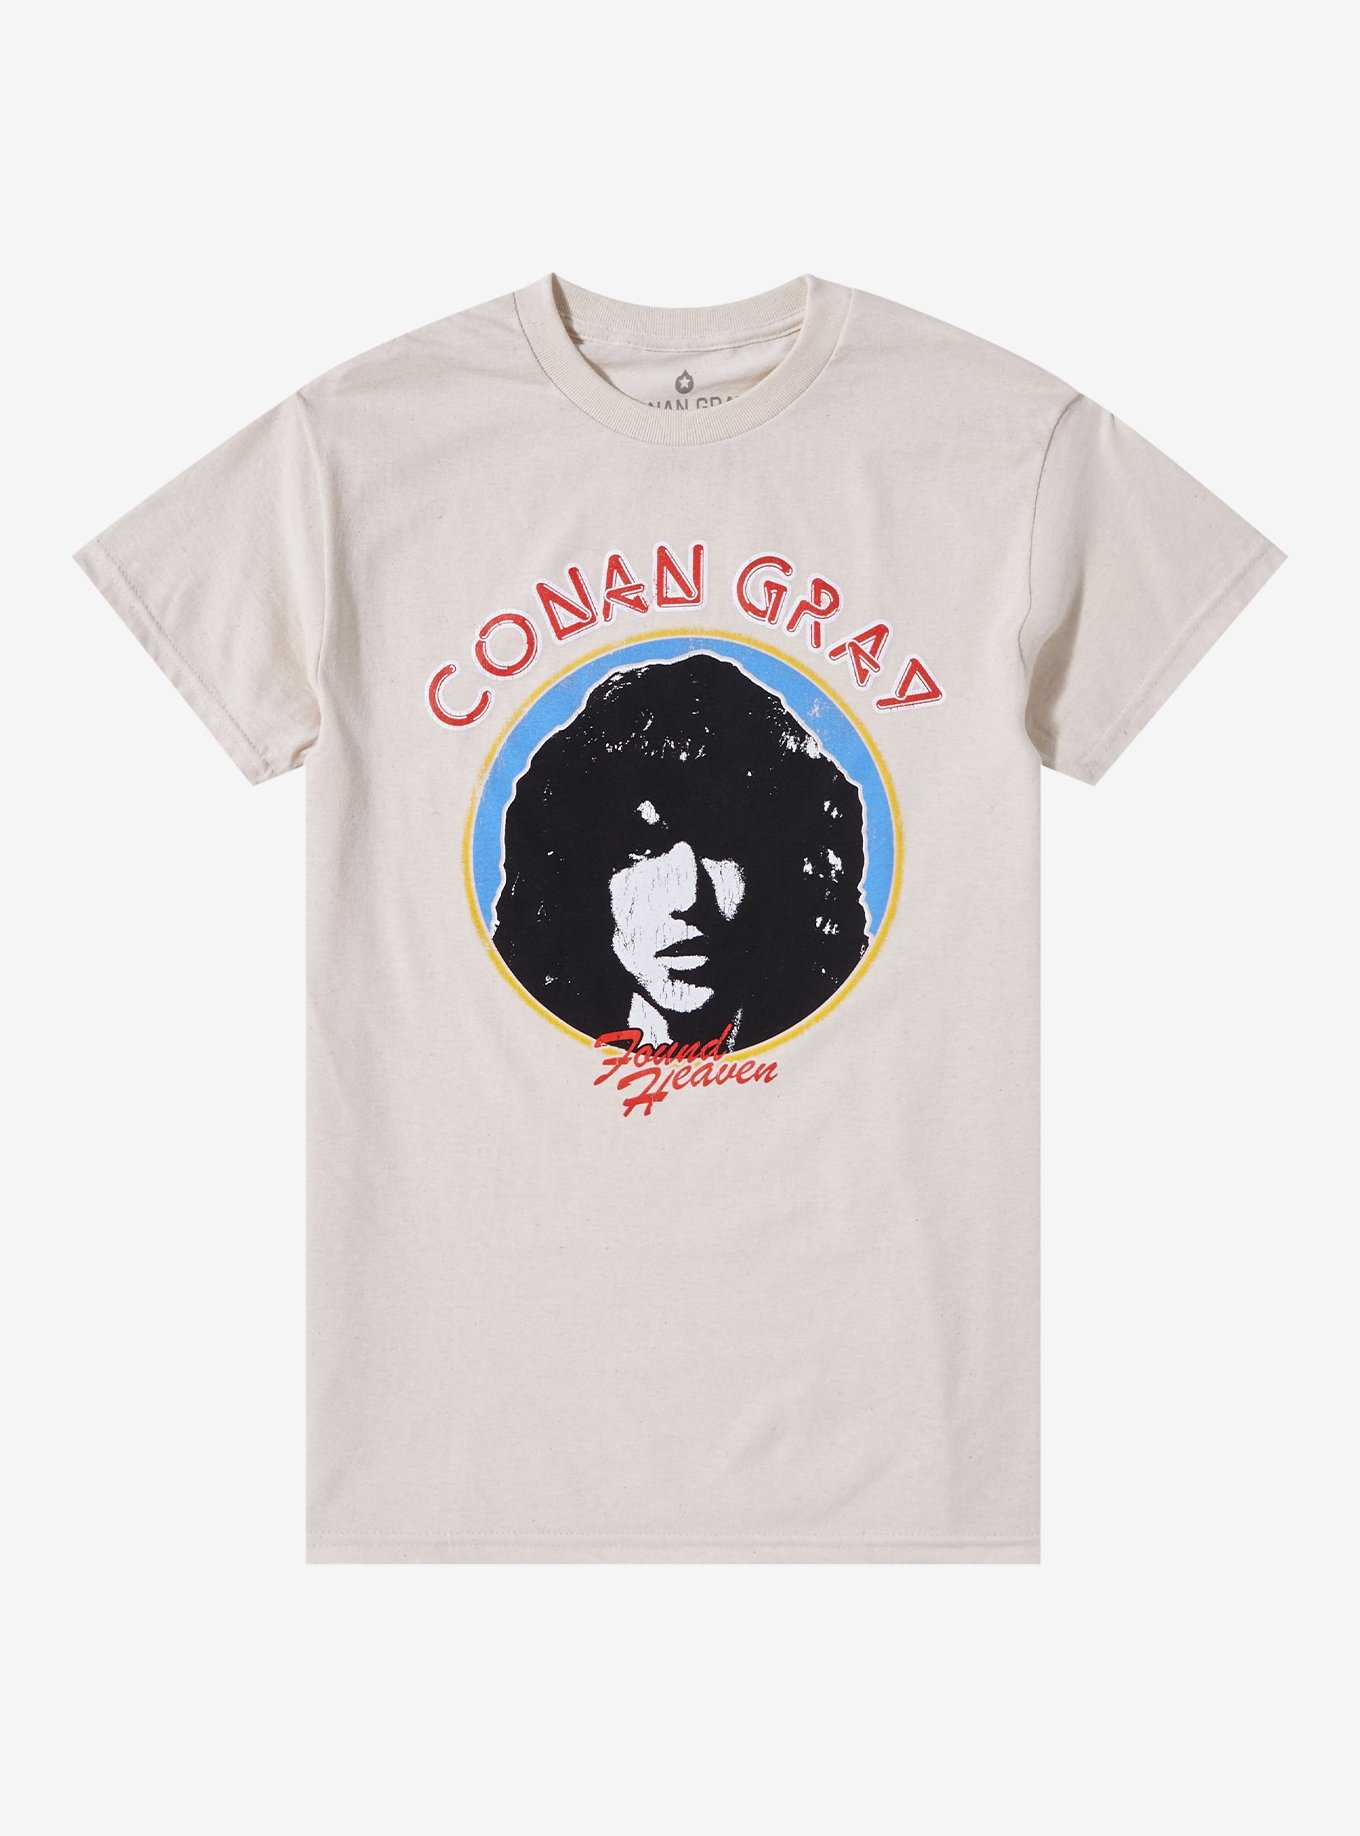 Conan Gray Found Heaven Vintage-Style Portrait Boyfriend Fit Girls T-Shirt, , hi-res